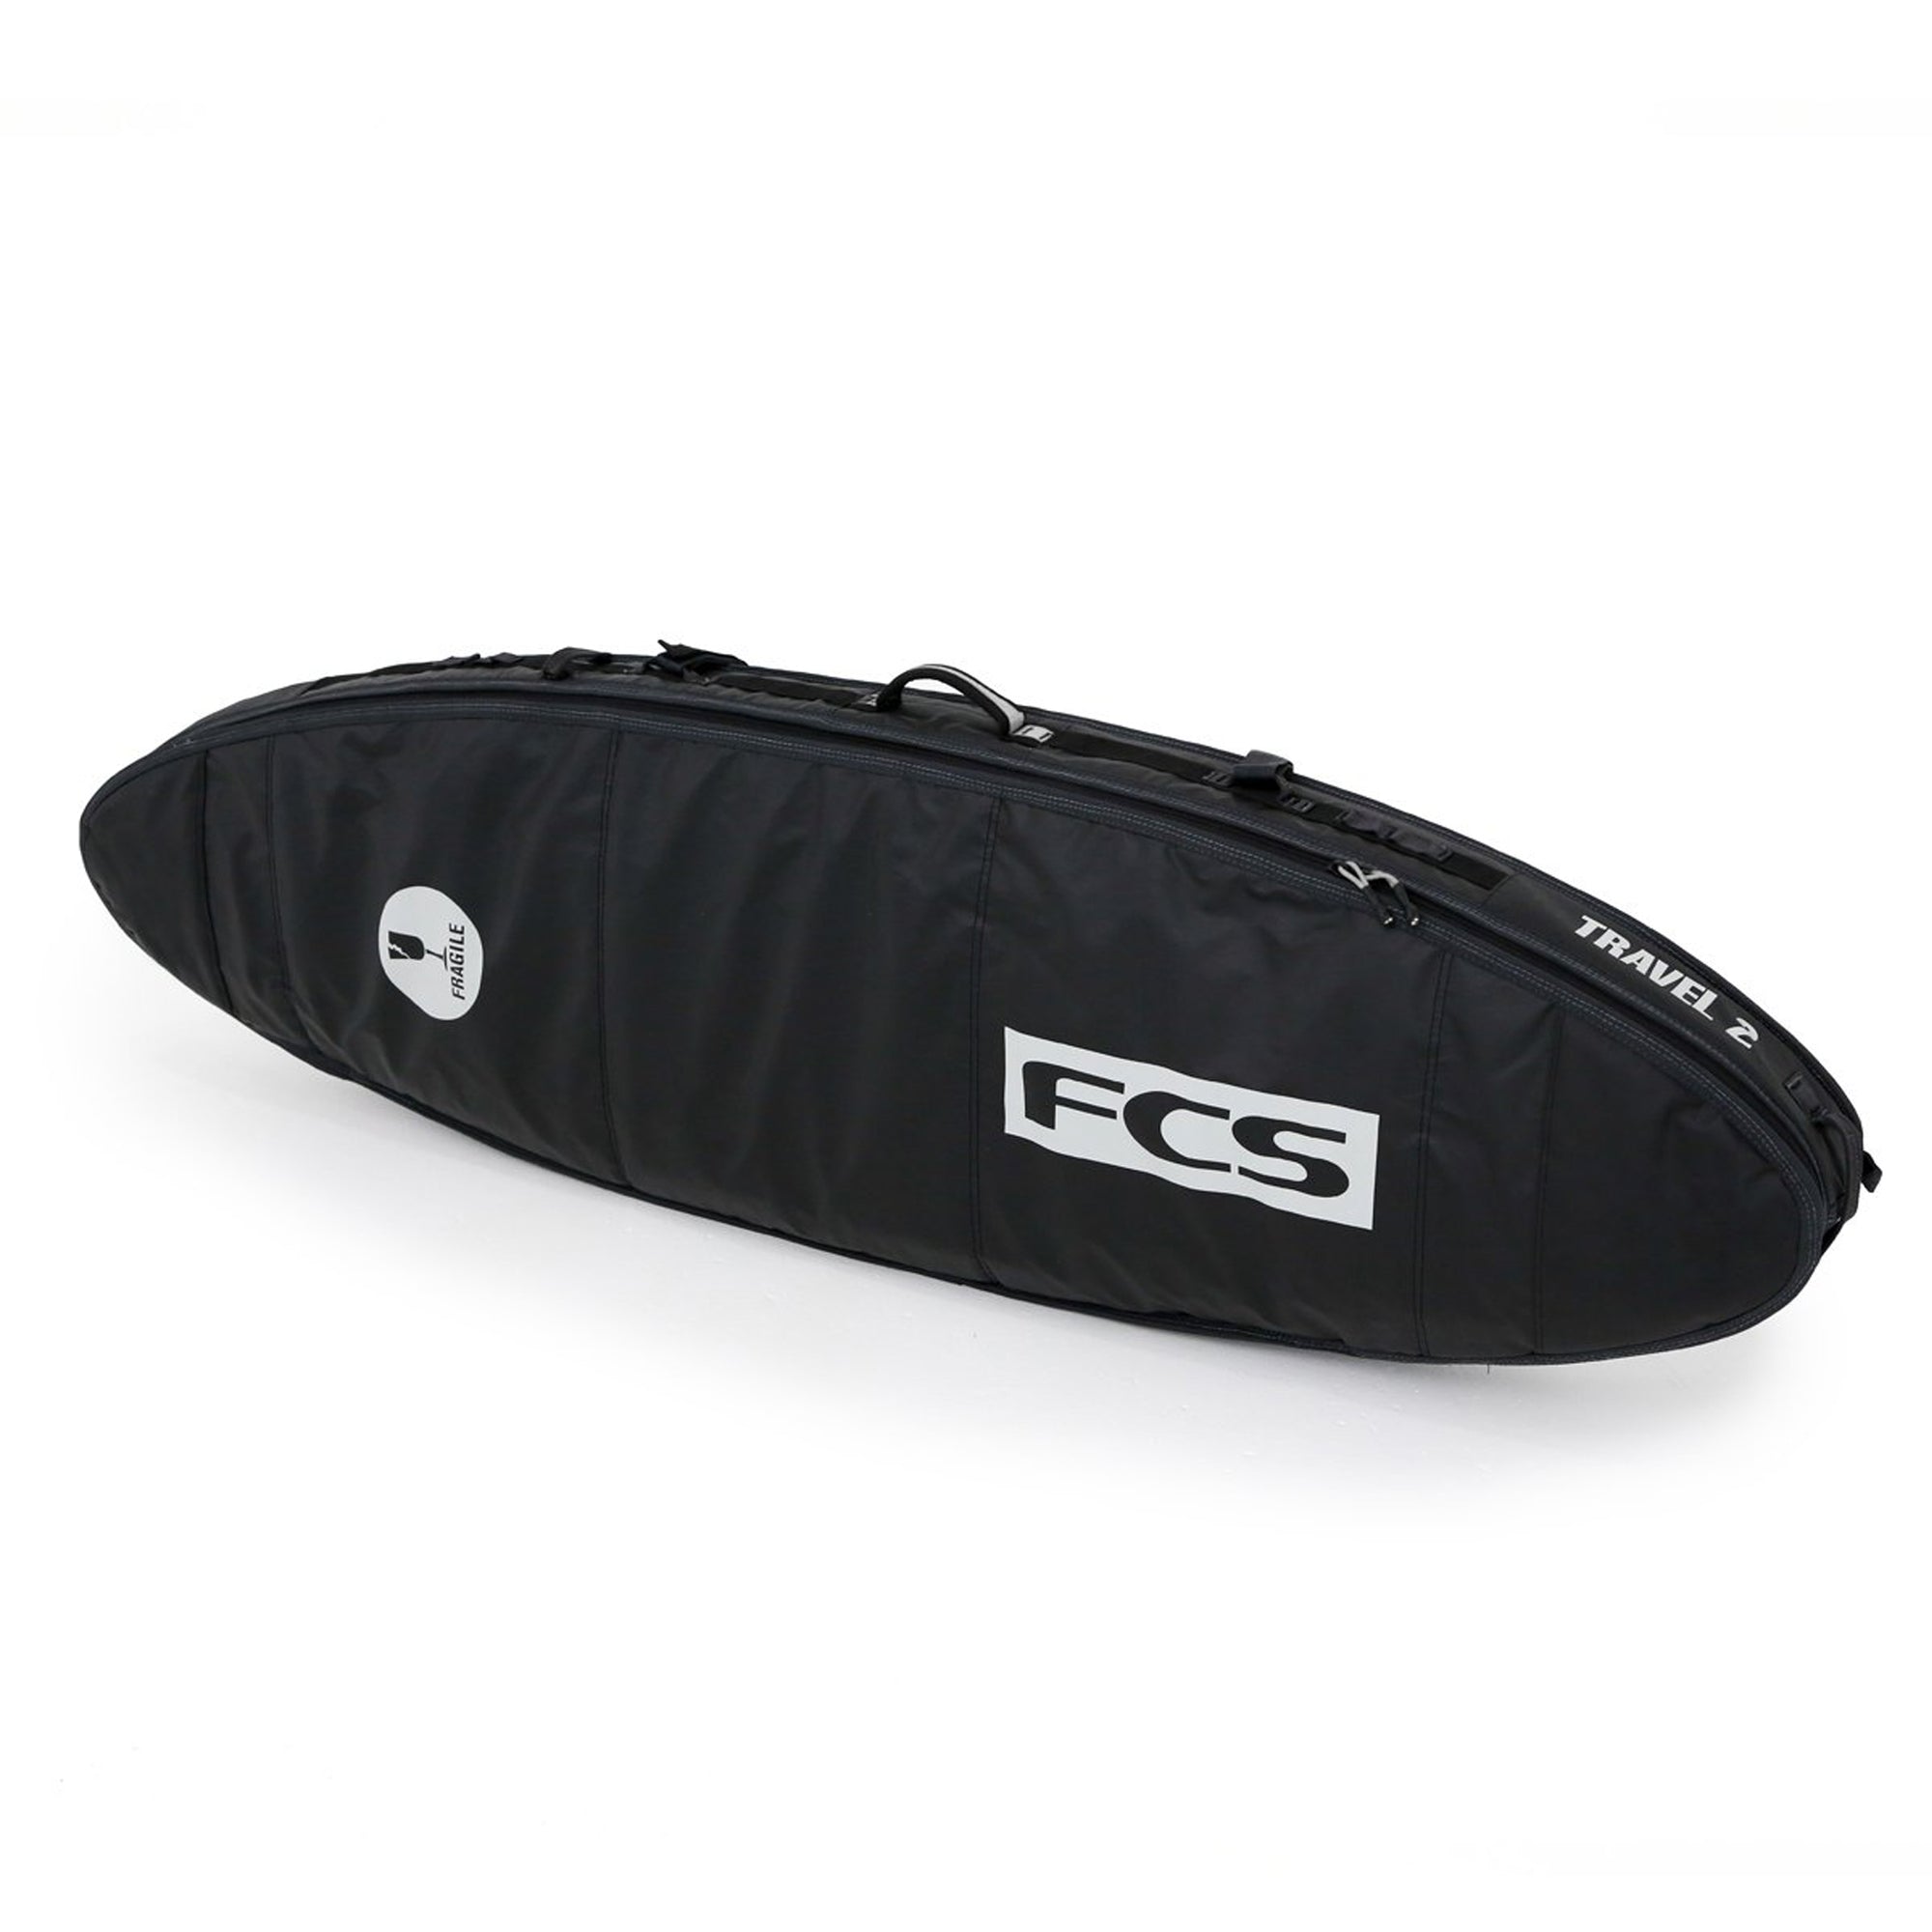 FCS Travel 2 All Purpose Surfboard Bag